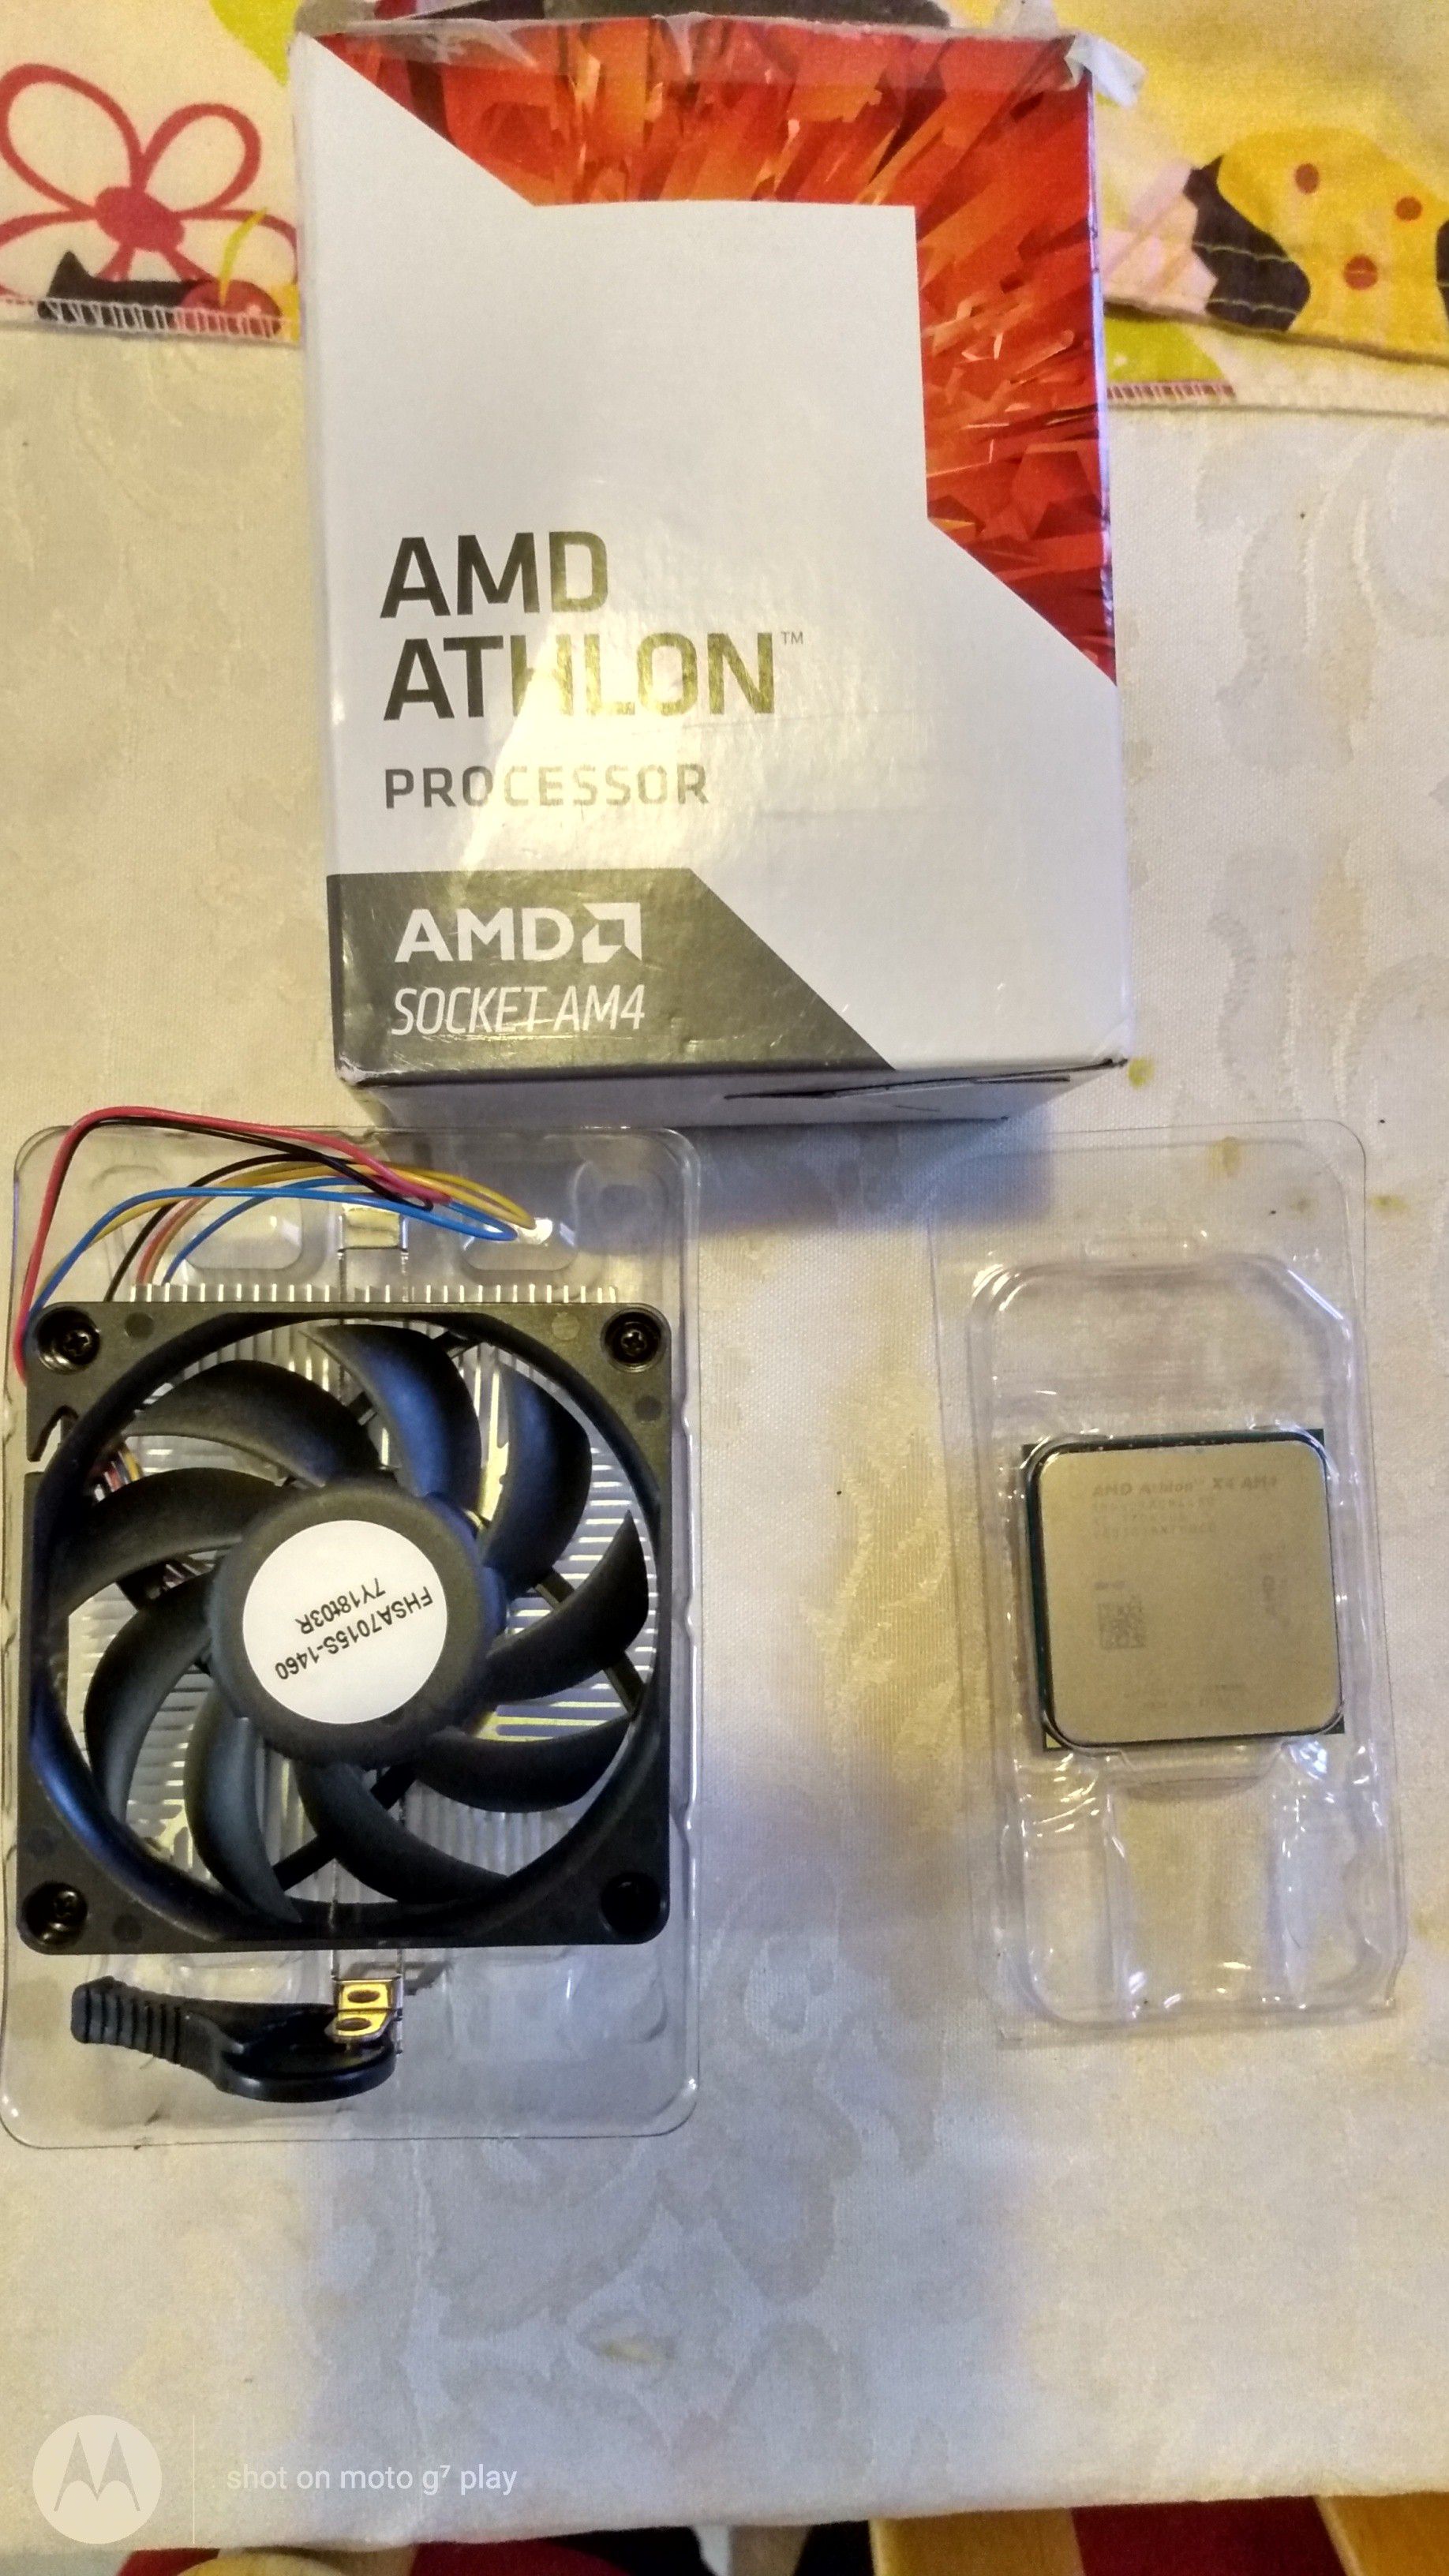 AMD Athlon x4 950 quad-core CPU AM4 socket